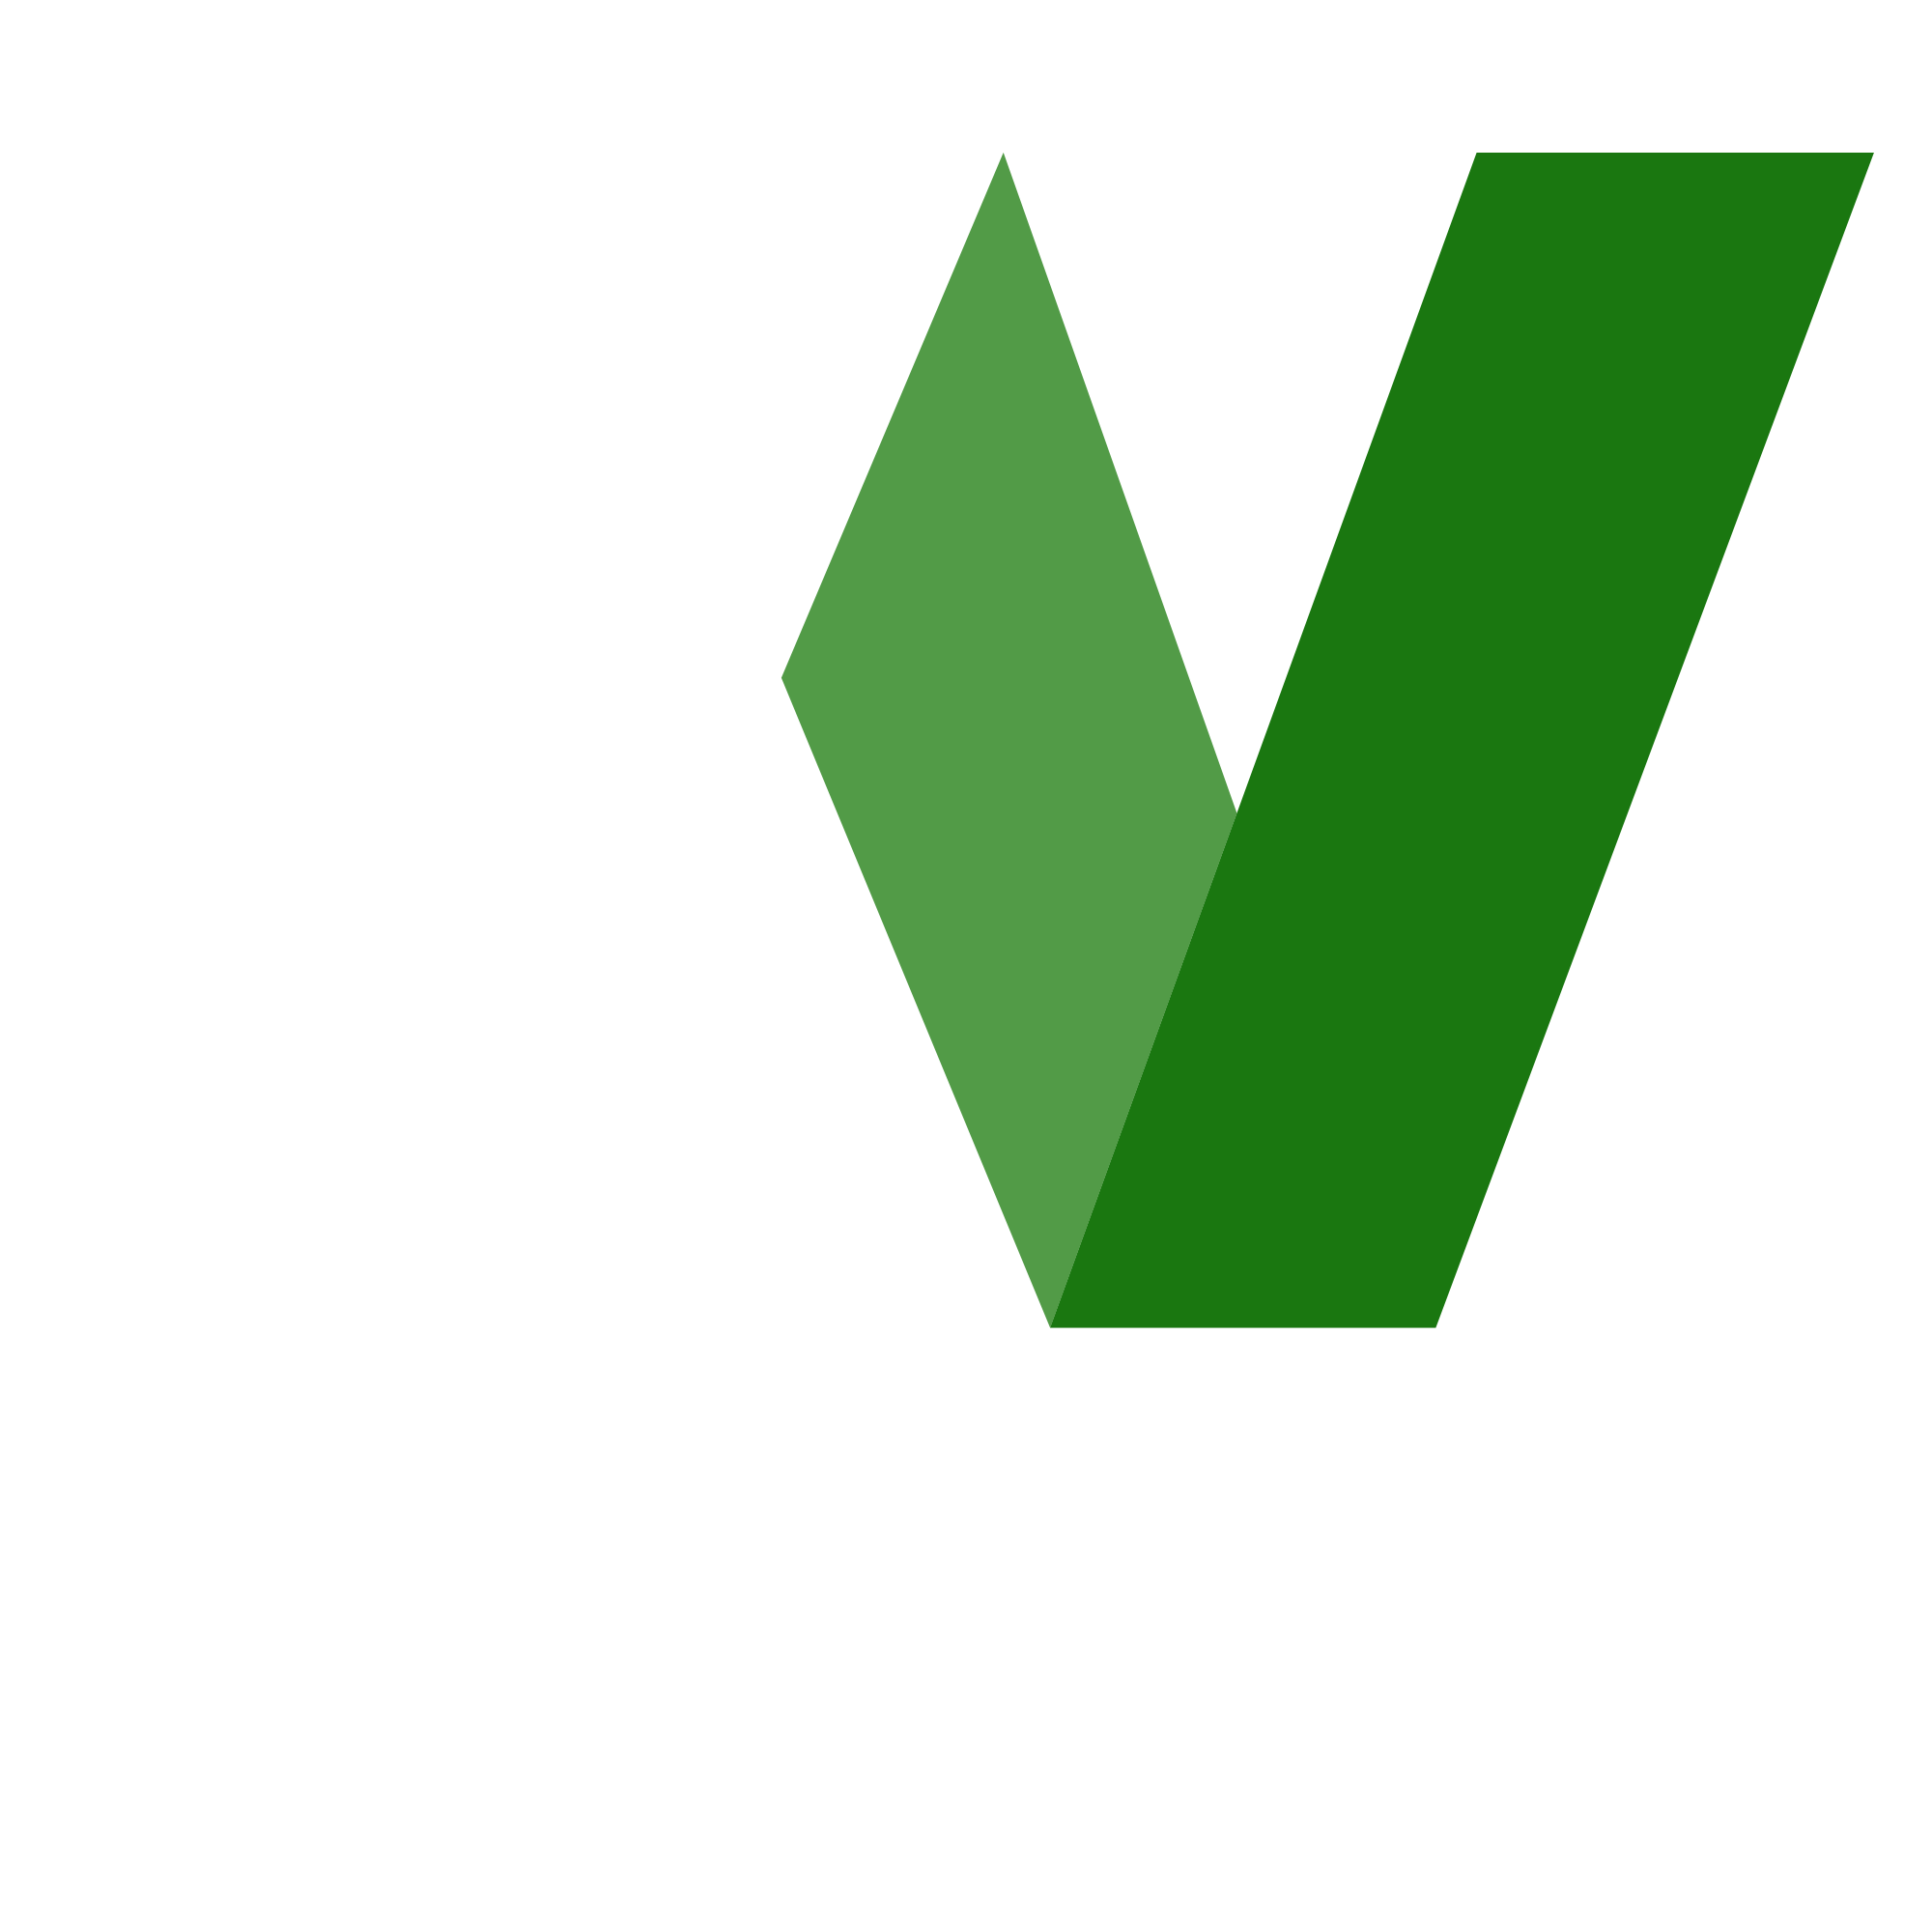 Wilson Cattle company logo